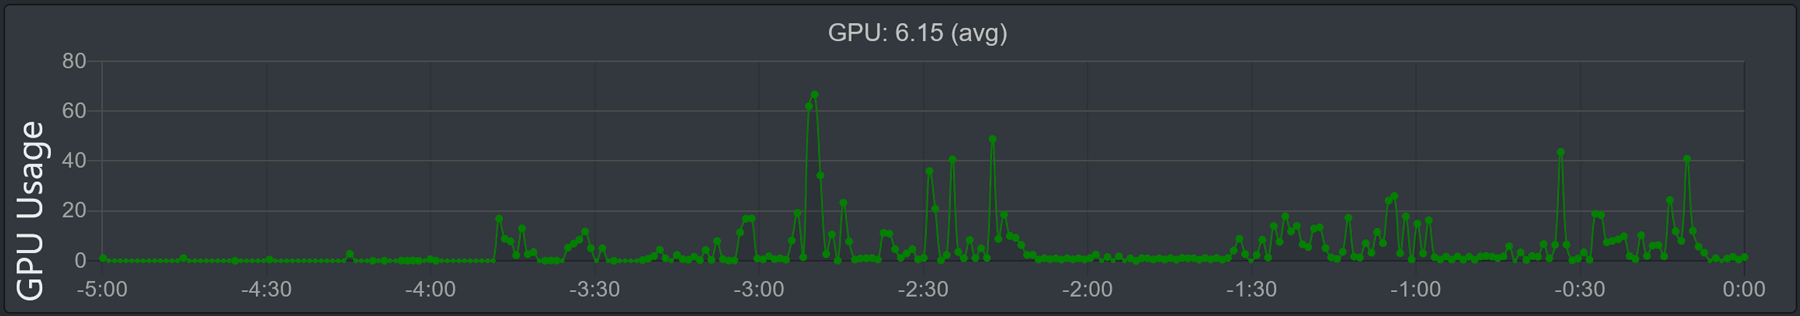 Afbeelding van de grafiek 'GPU-gebruik